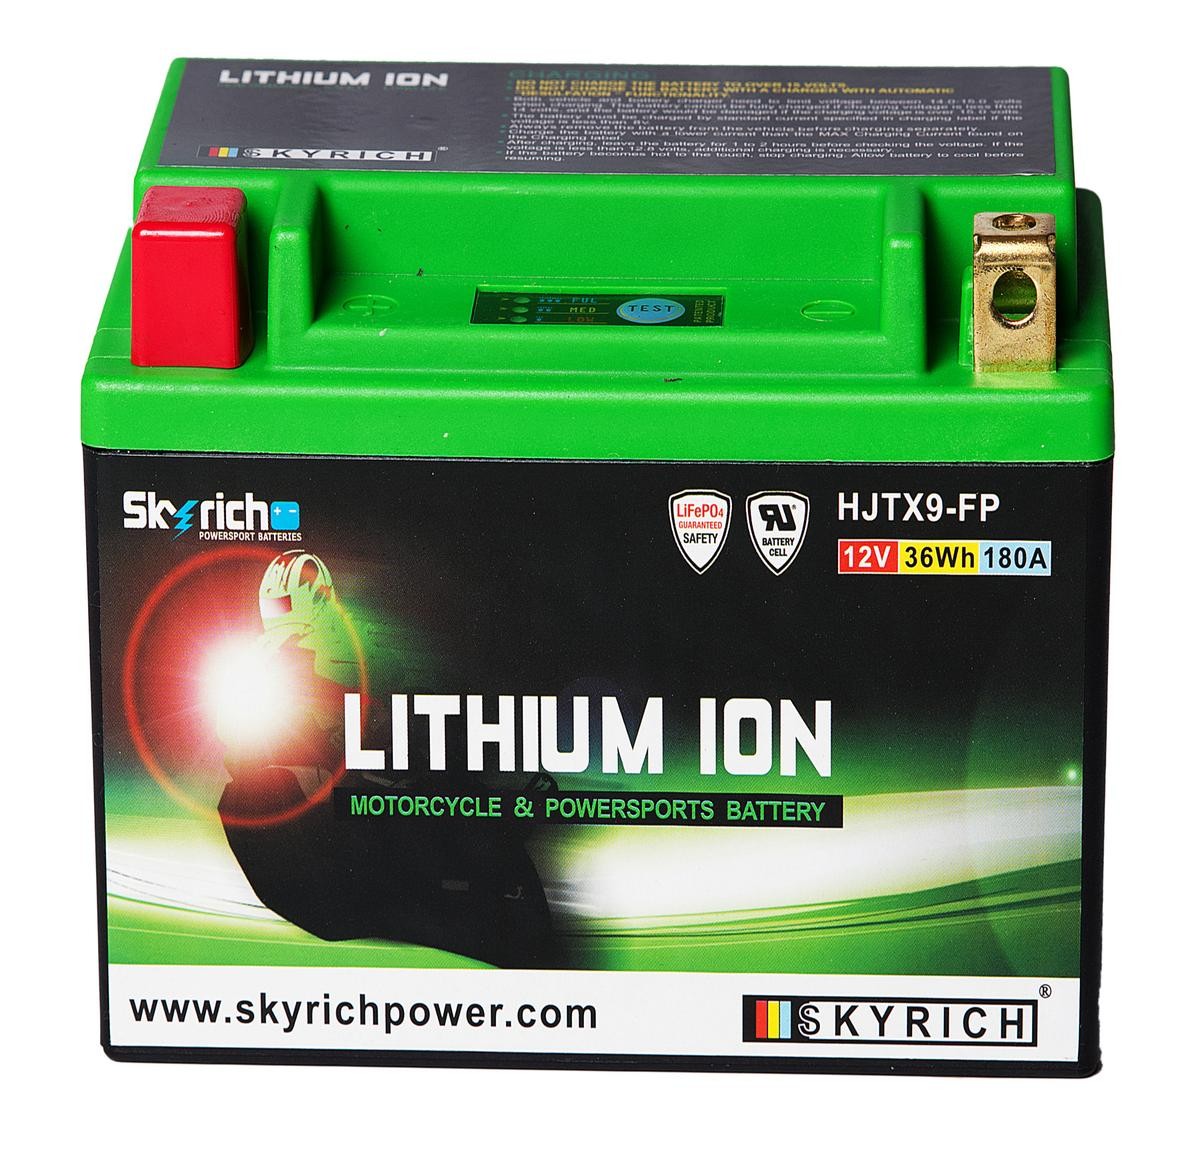 SKYRICH LITHIUM ION Batterie 12V 3Ah 180A N Li-Ionen-Batterie HJTX9-FP SUZUKI Mofa Maxi-Scooter